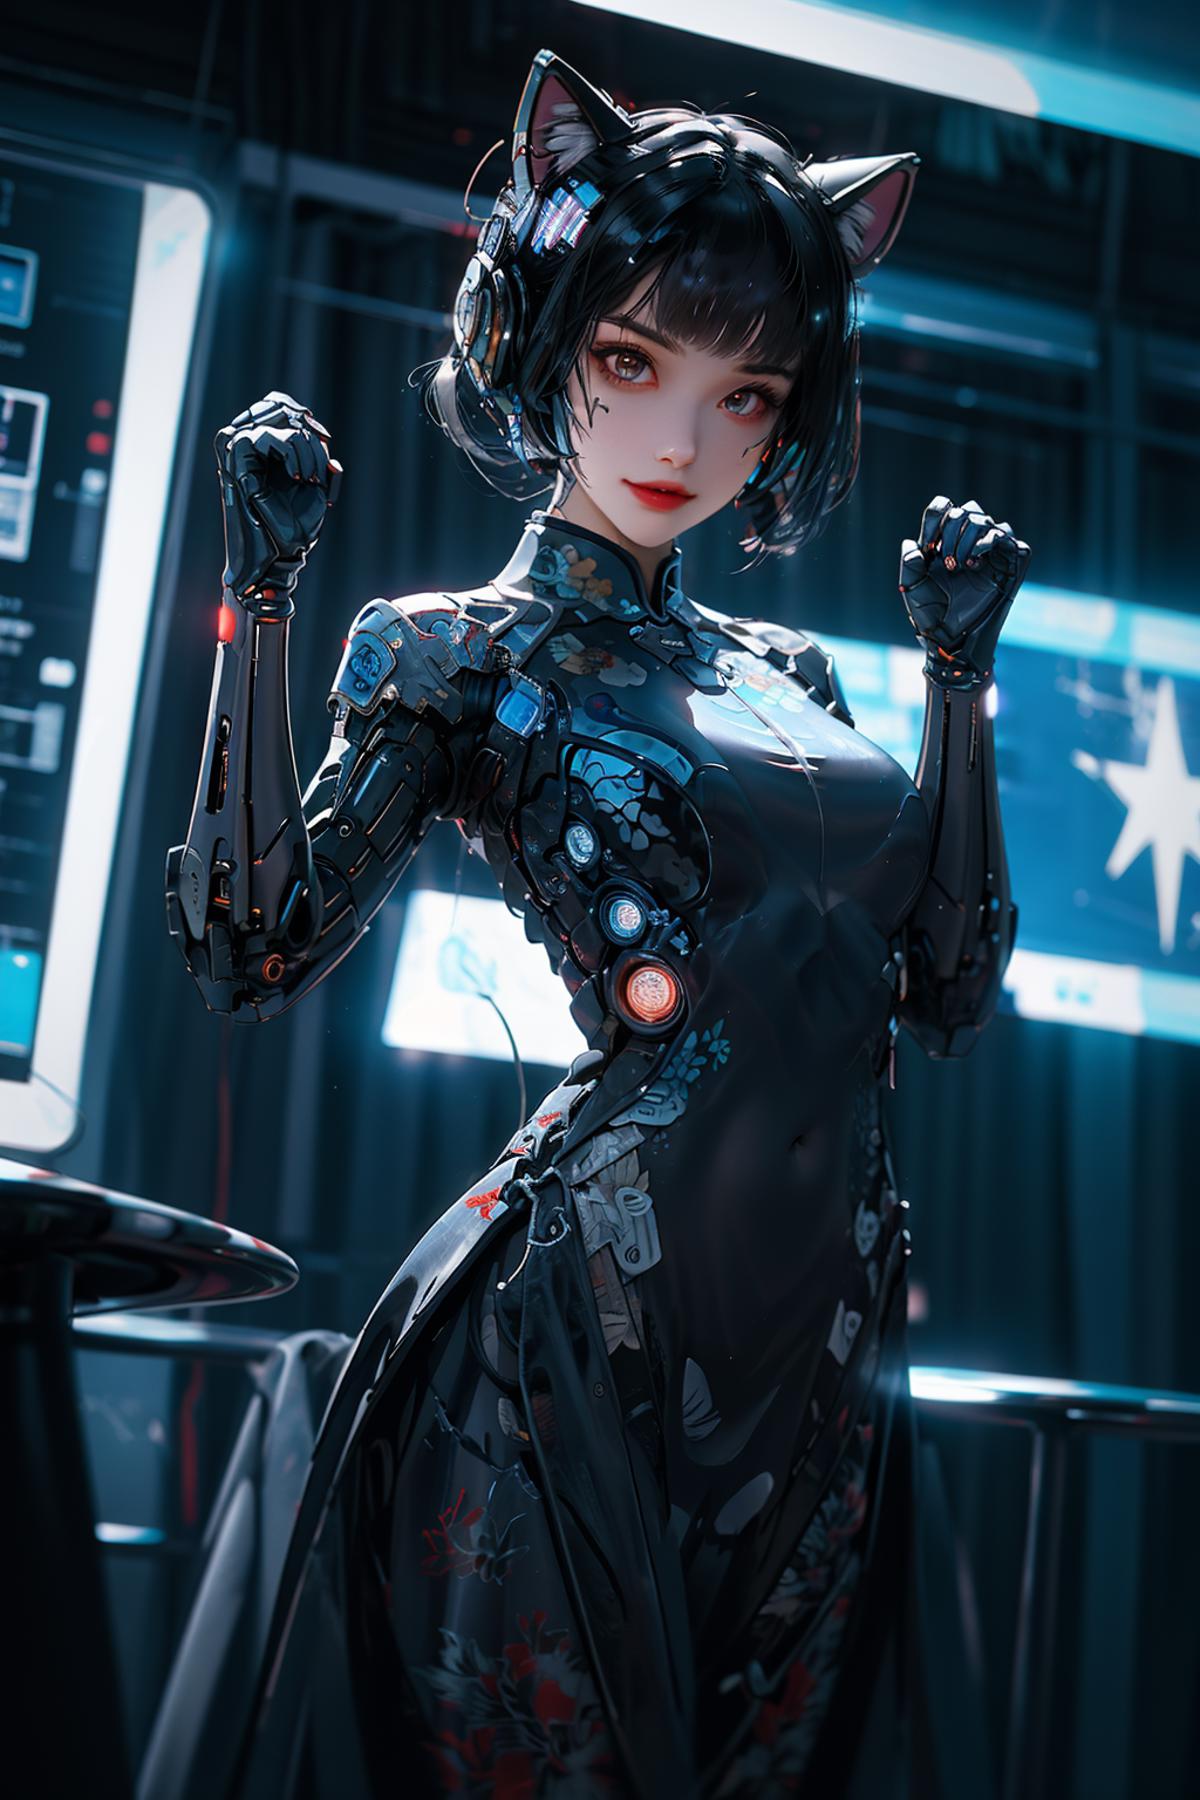 AI model image by XiongSan